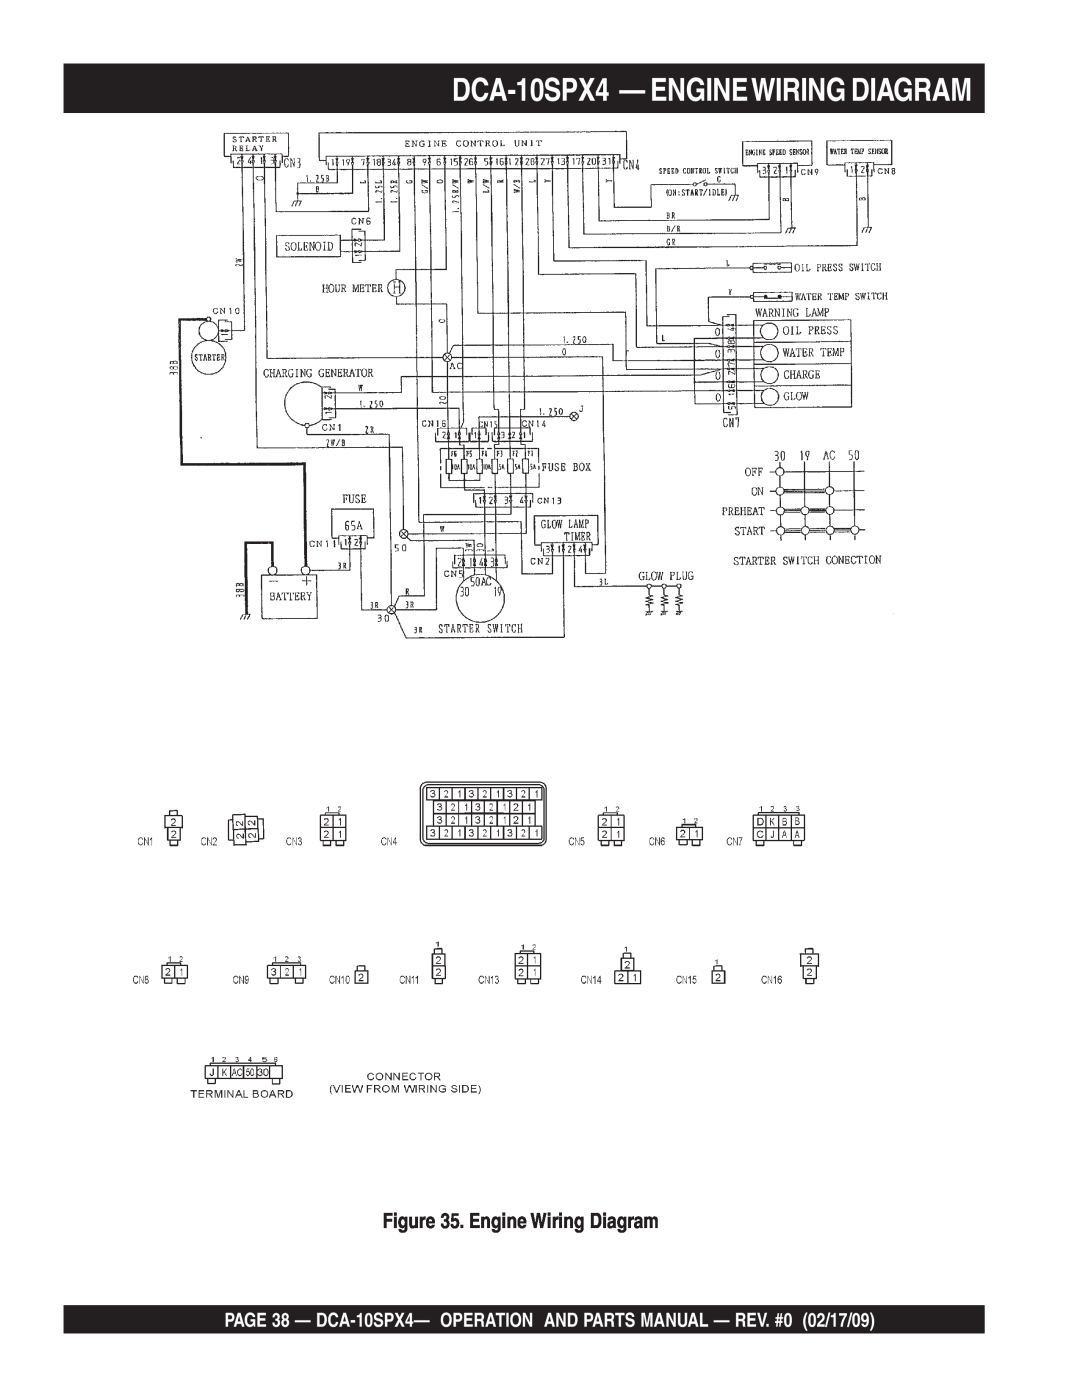 Multiquip operation manual DCA-10SPX4 - ENGINEWIRING DIAGRAM, Engine Wiring Diagram 